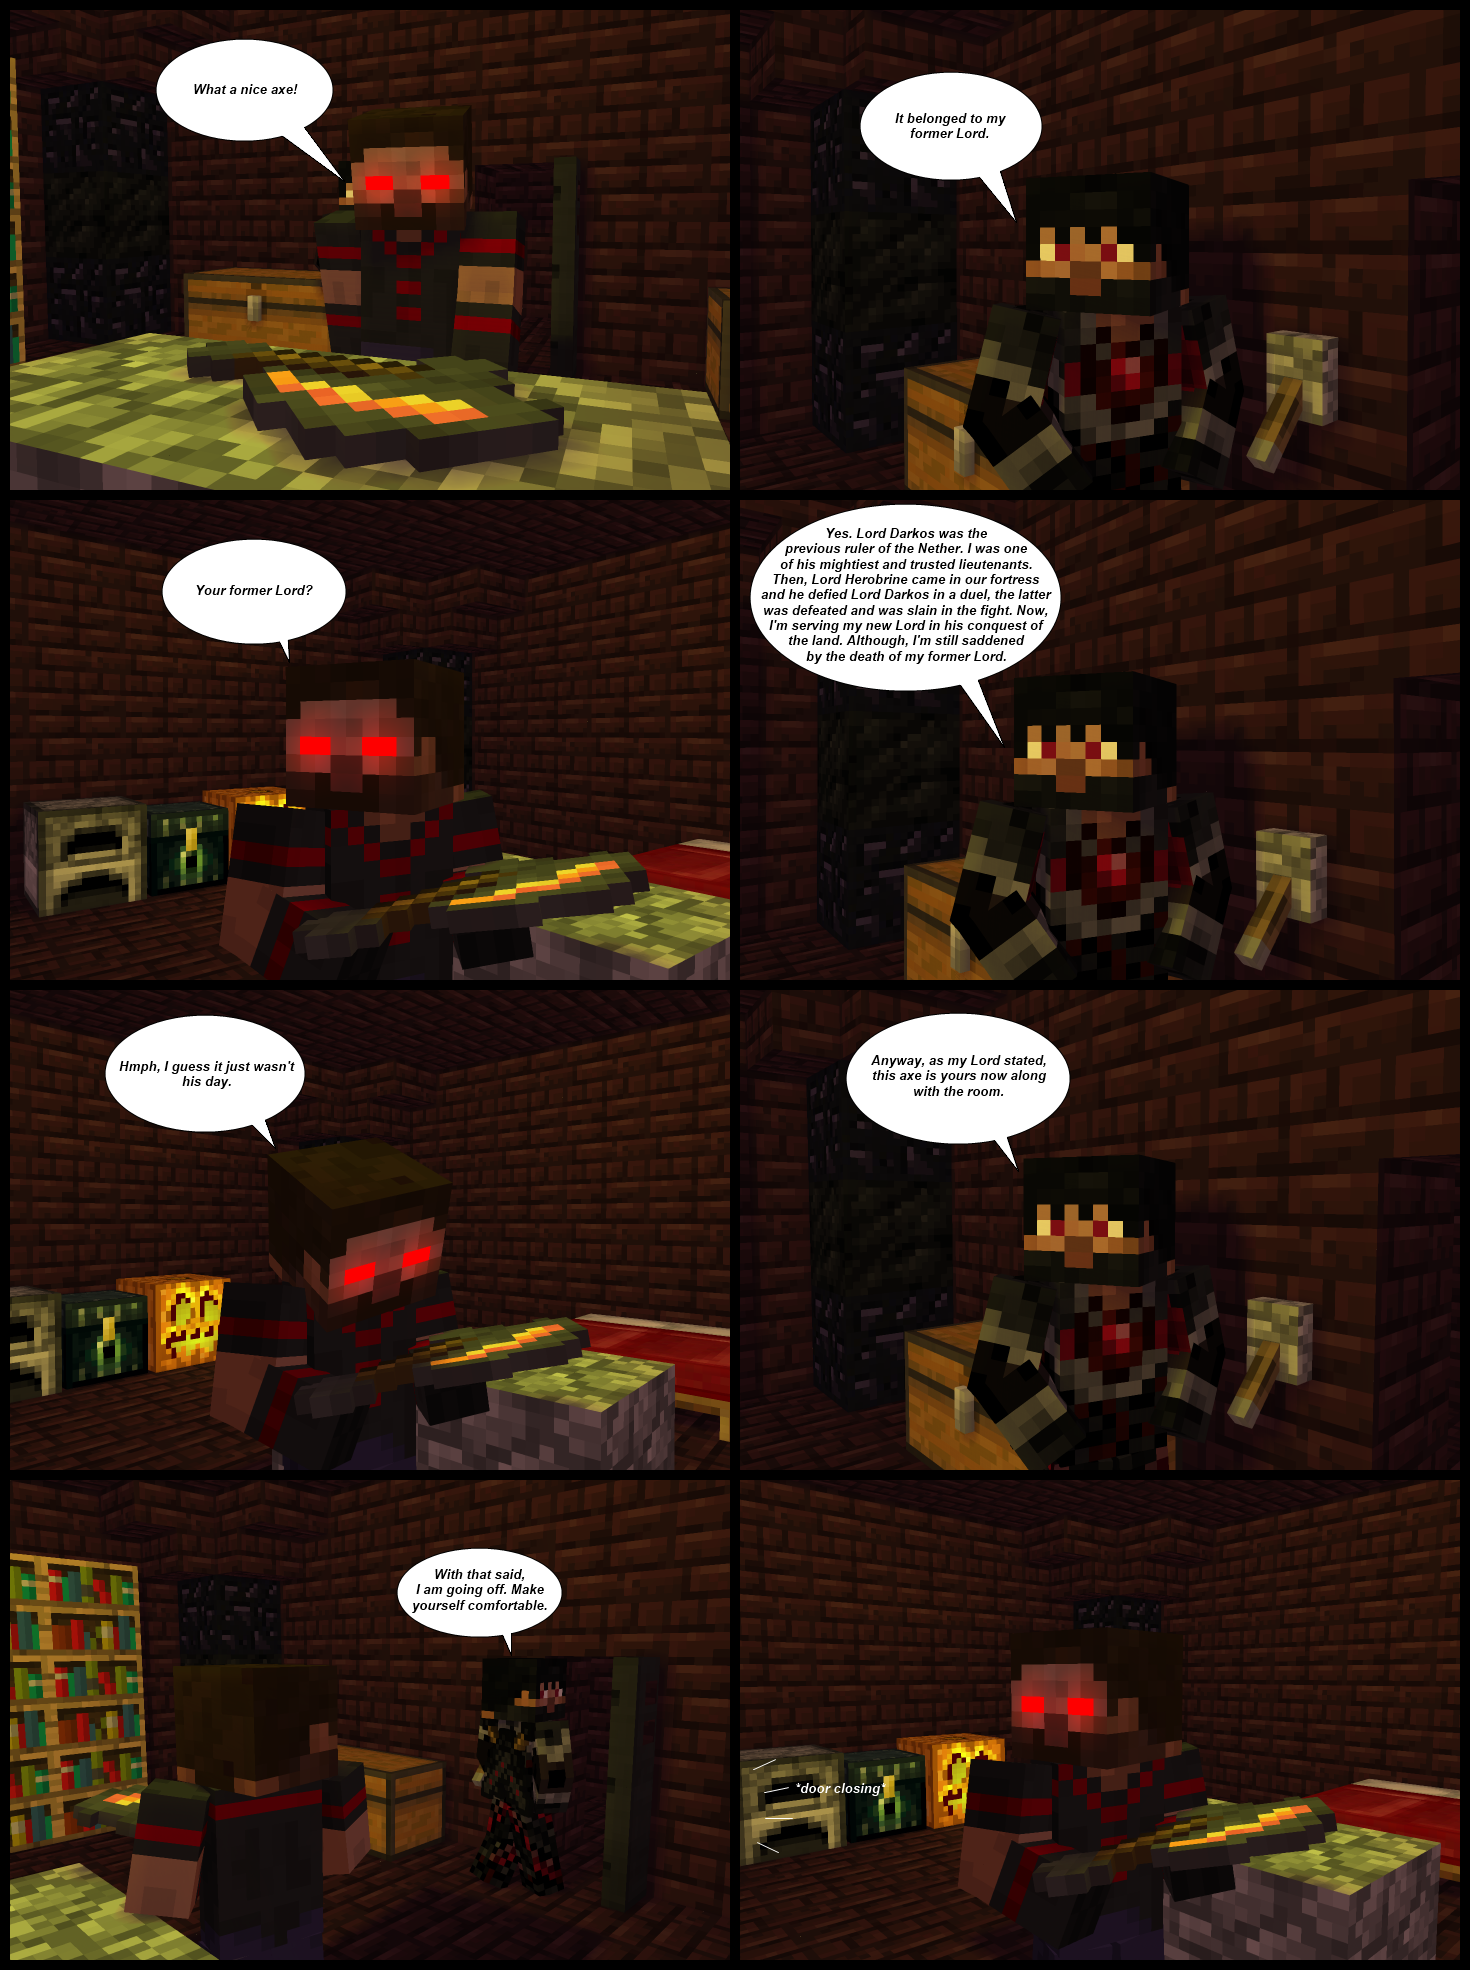 [Comic] Herobrine - Page 20 by fighter33000 on DeviantArt